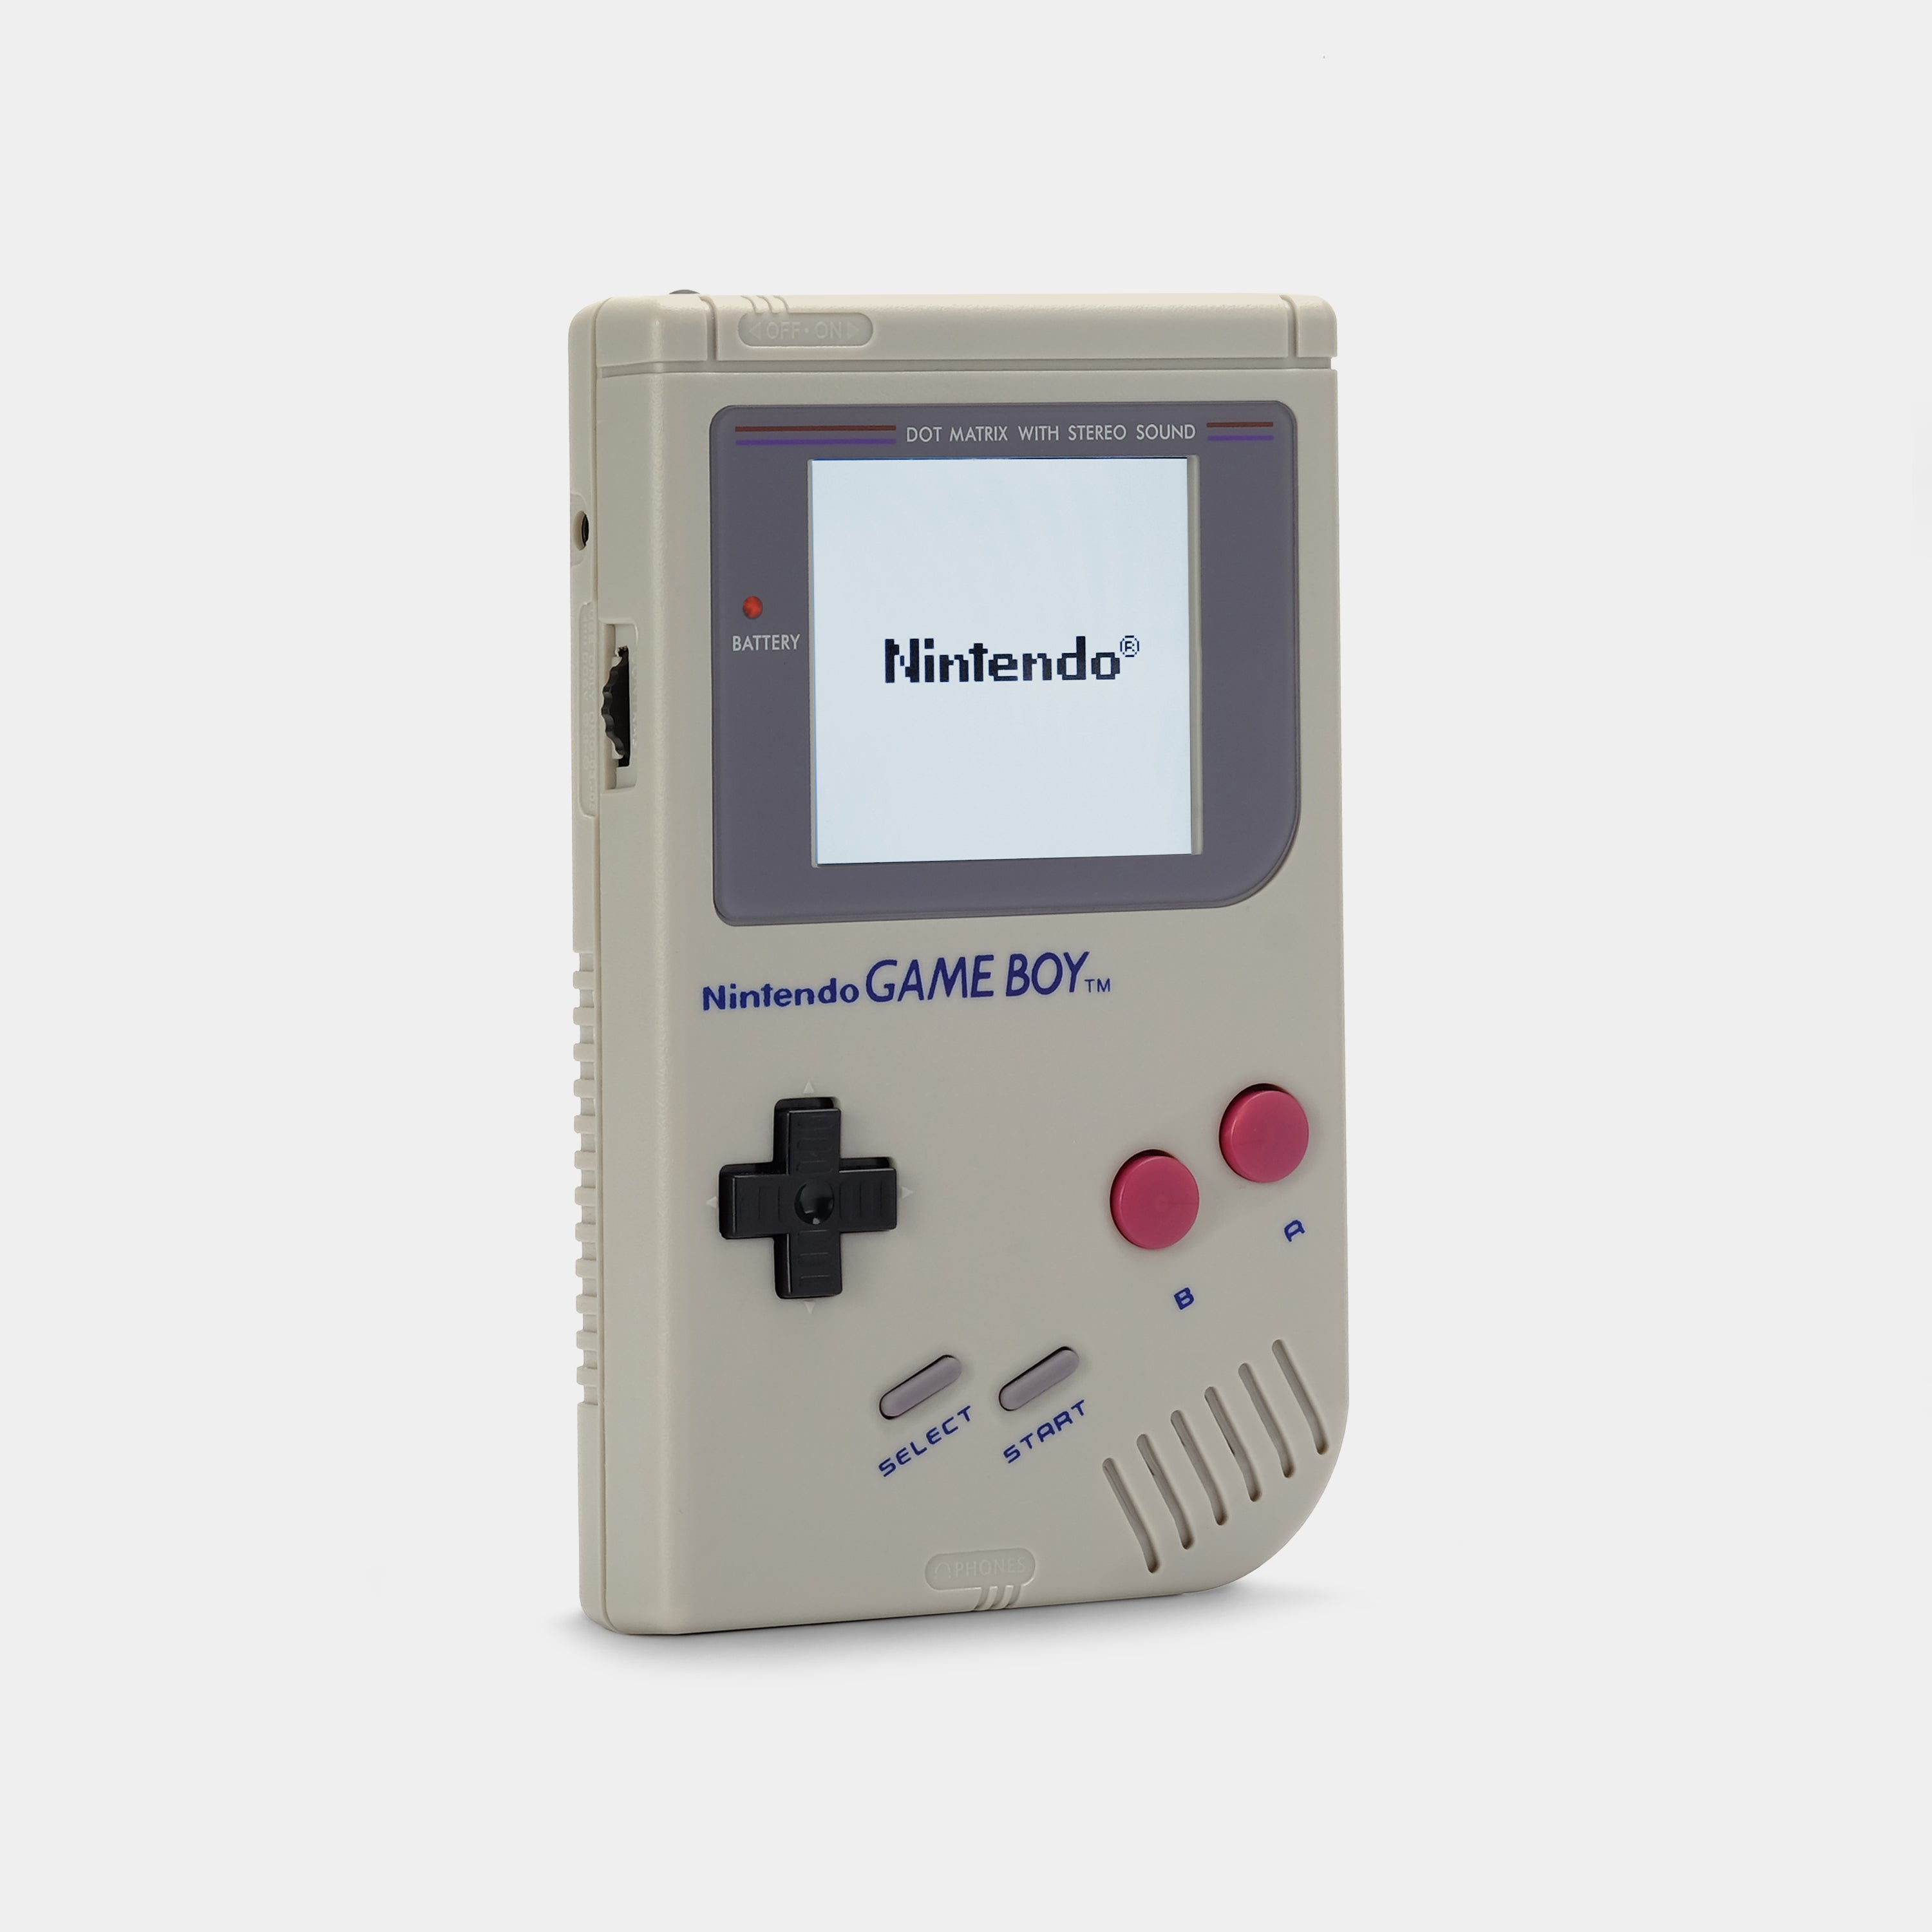 O clássico Game Boy